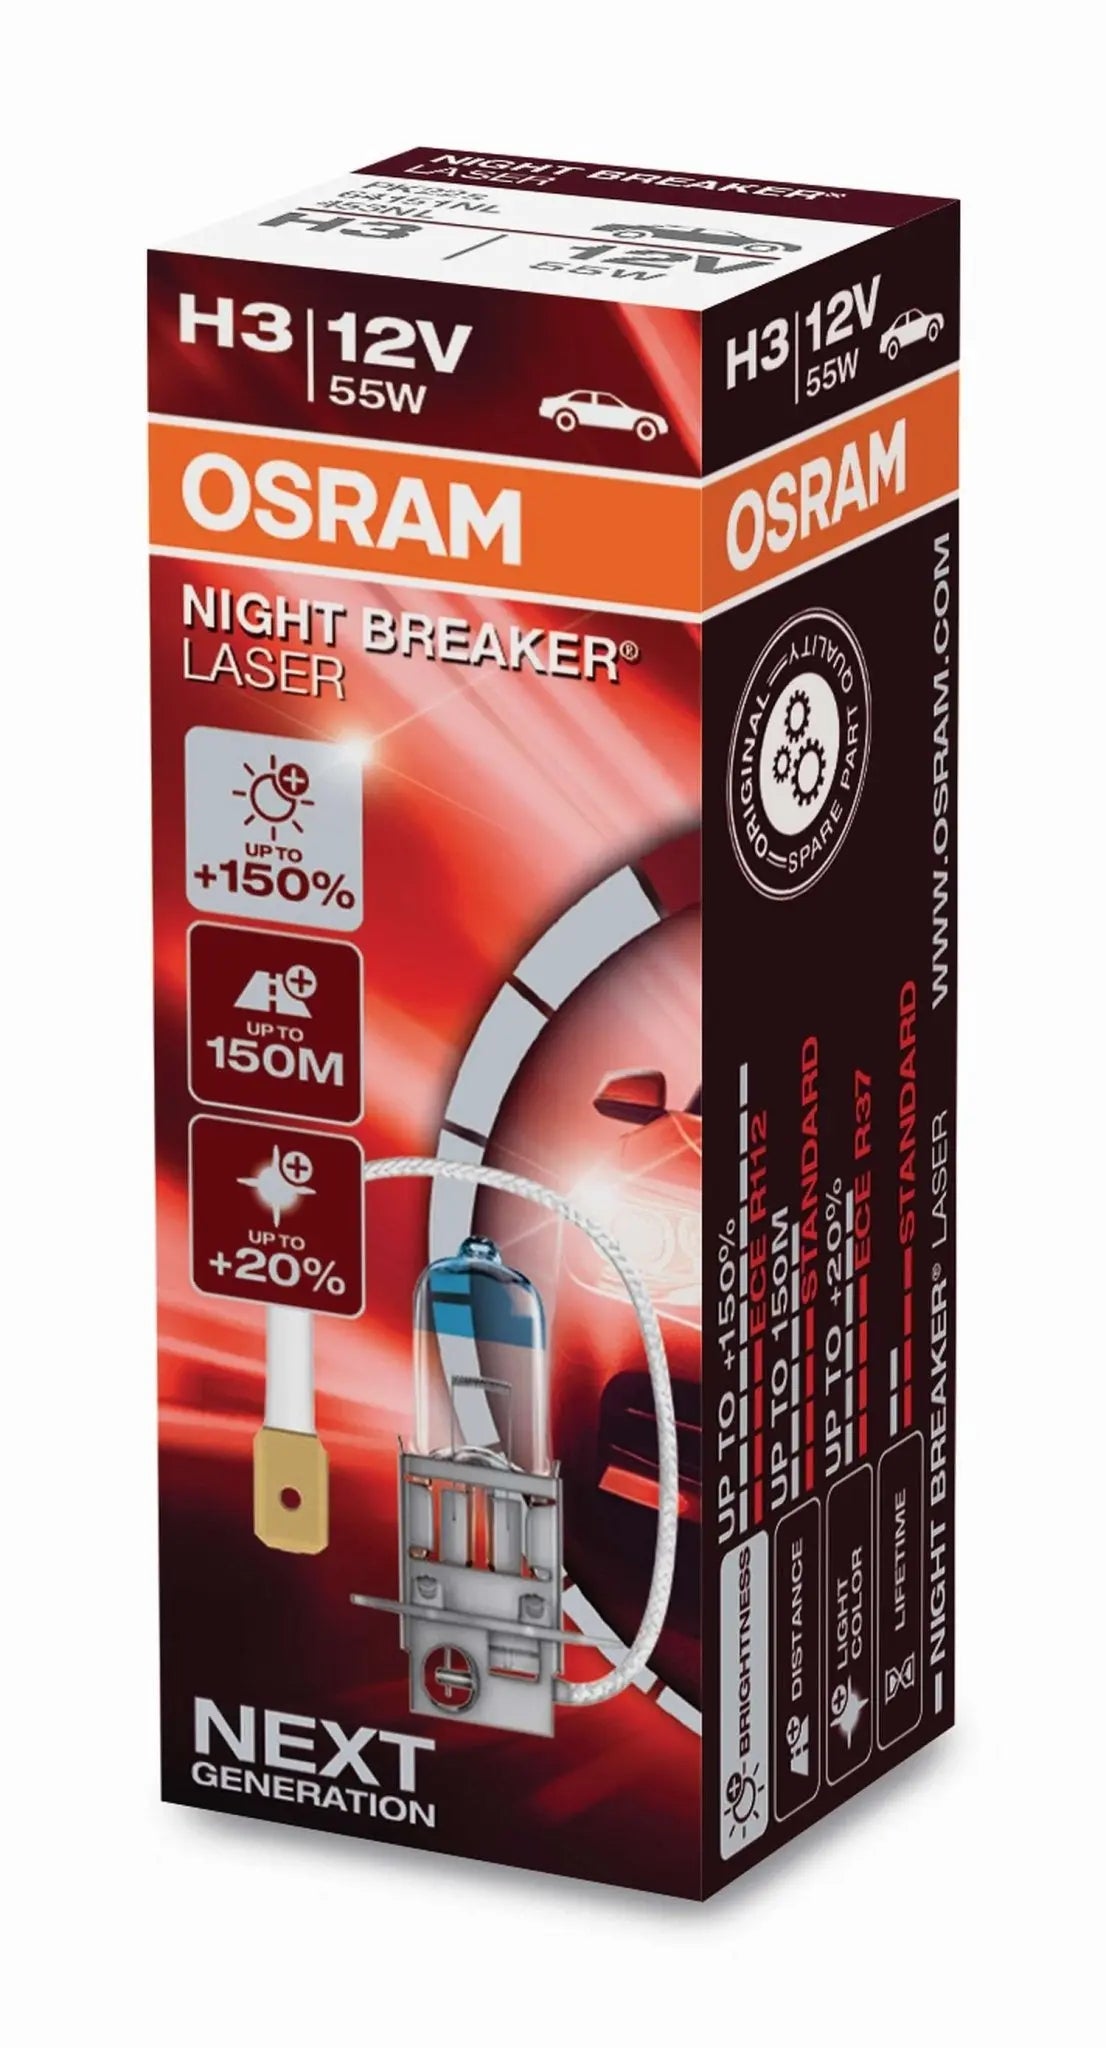 H3 12V 55W PK22s NIGHT BREAKER® LASER +150% mehr Helligkeit 1 st. OSRAM - Samsuns Group